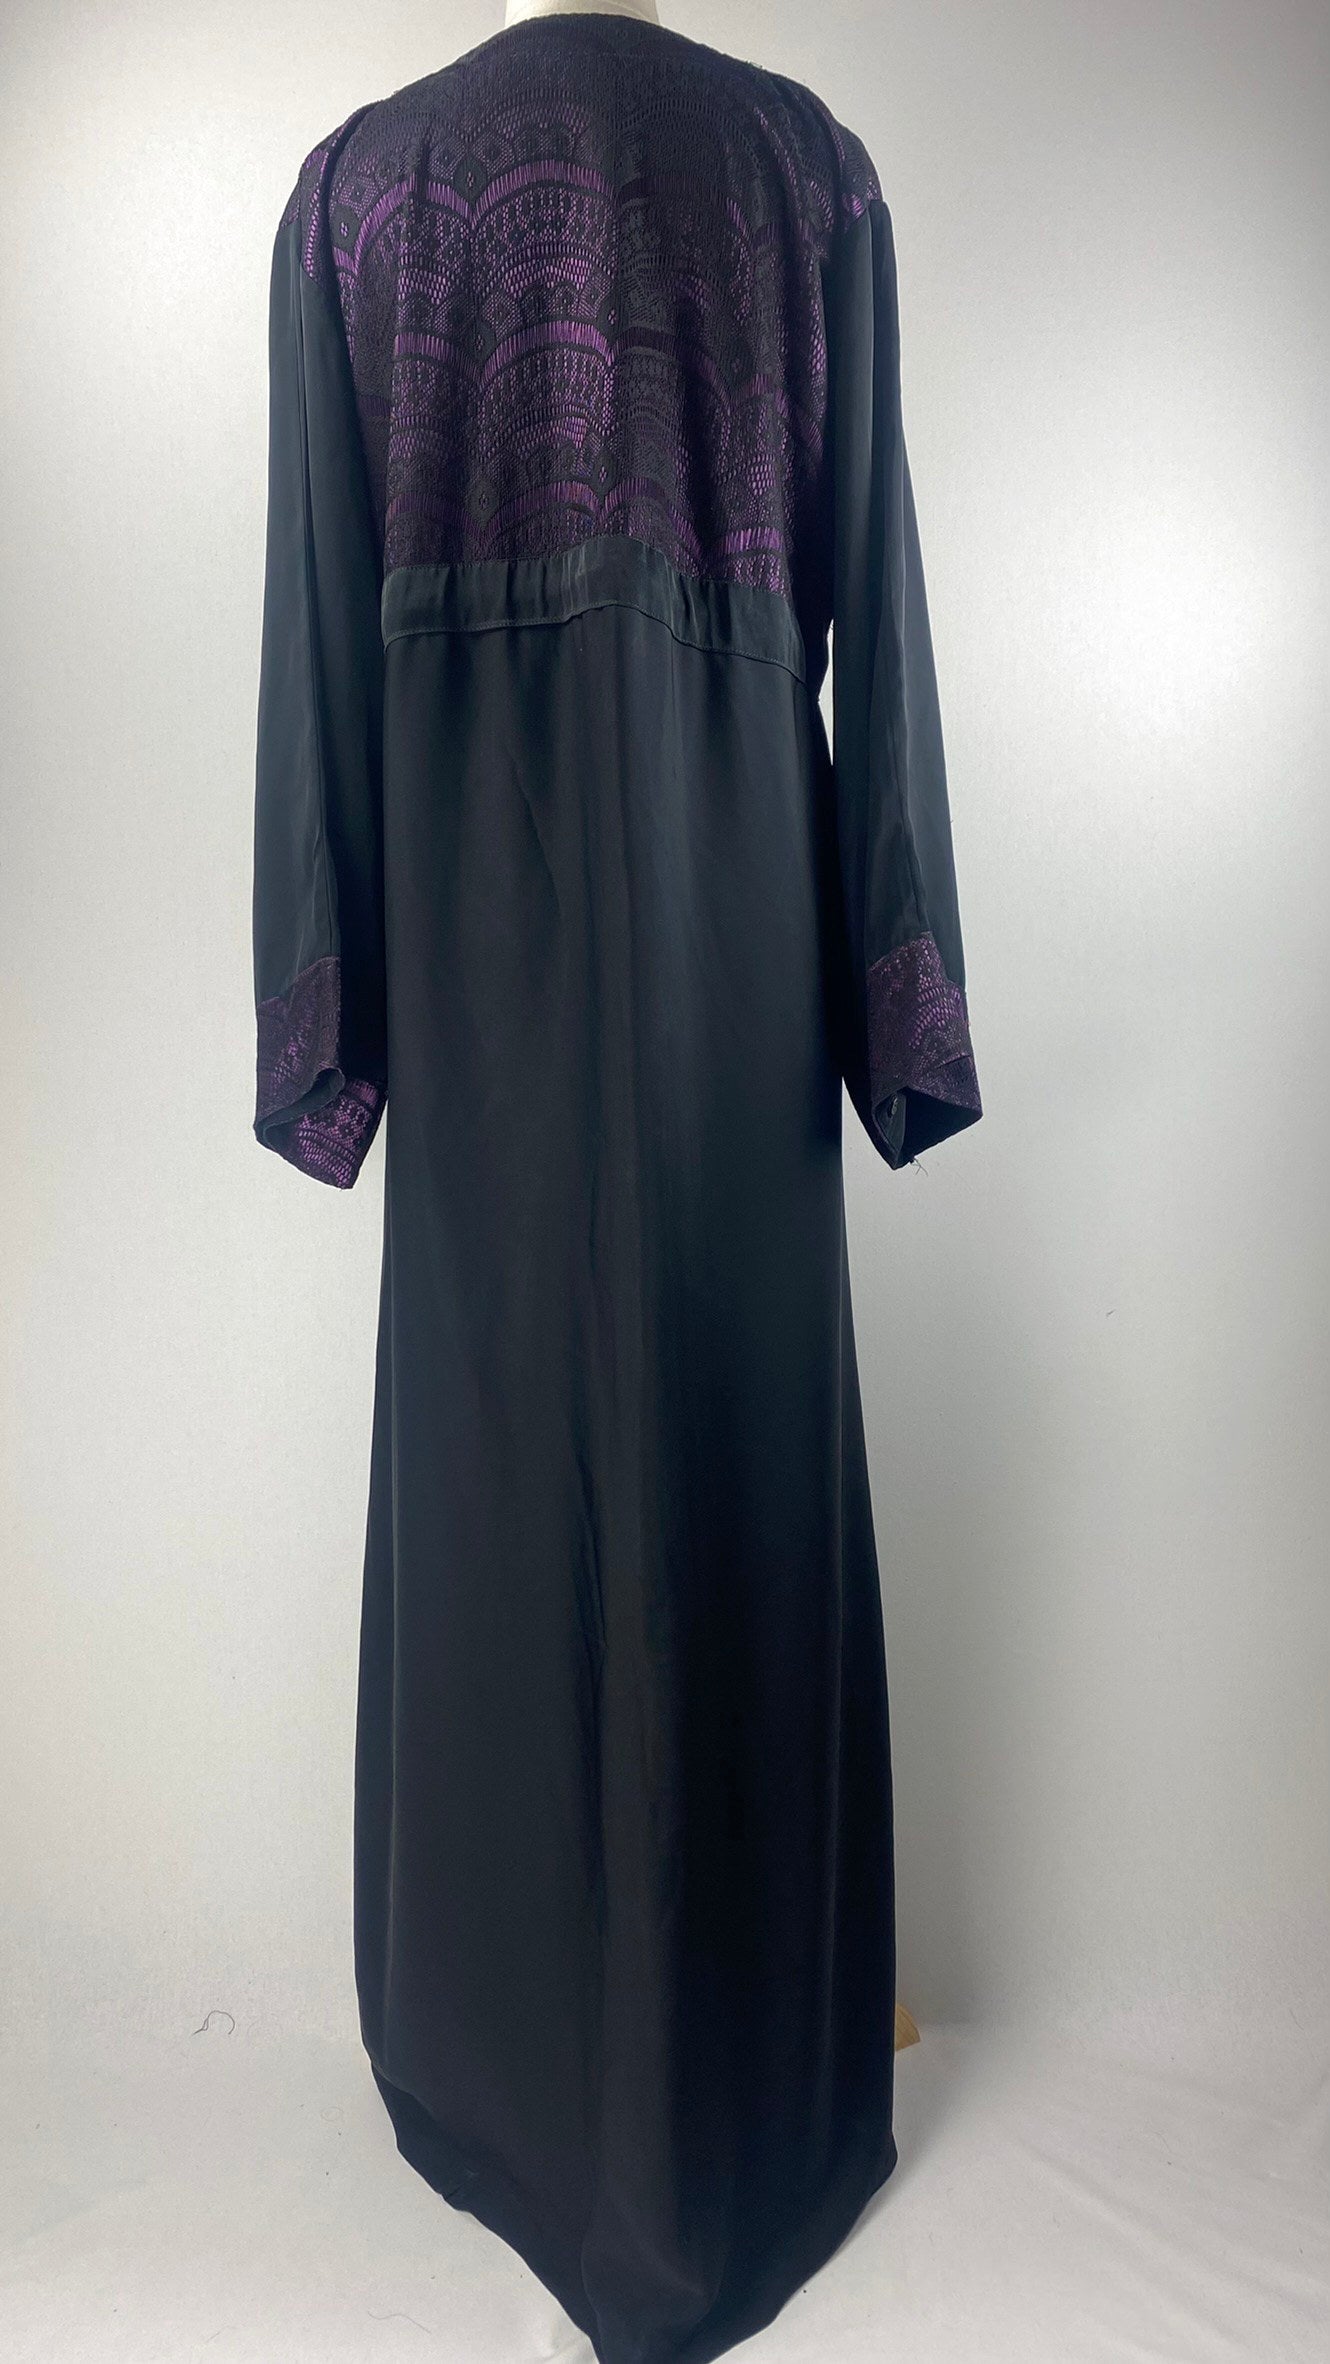 Long Sleeve Closed Abaya with Lace, Black/Purple